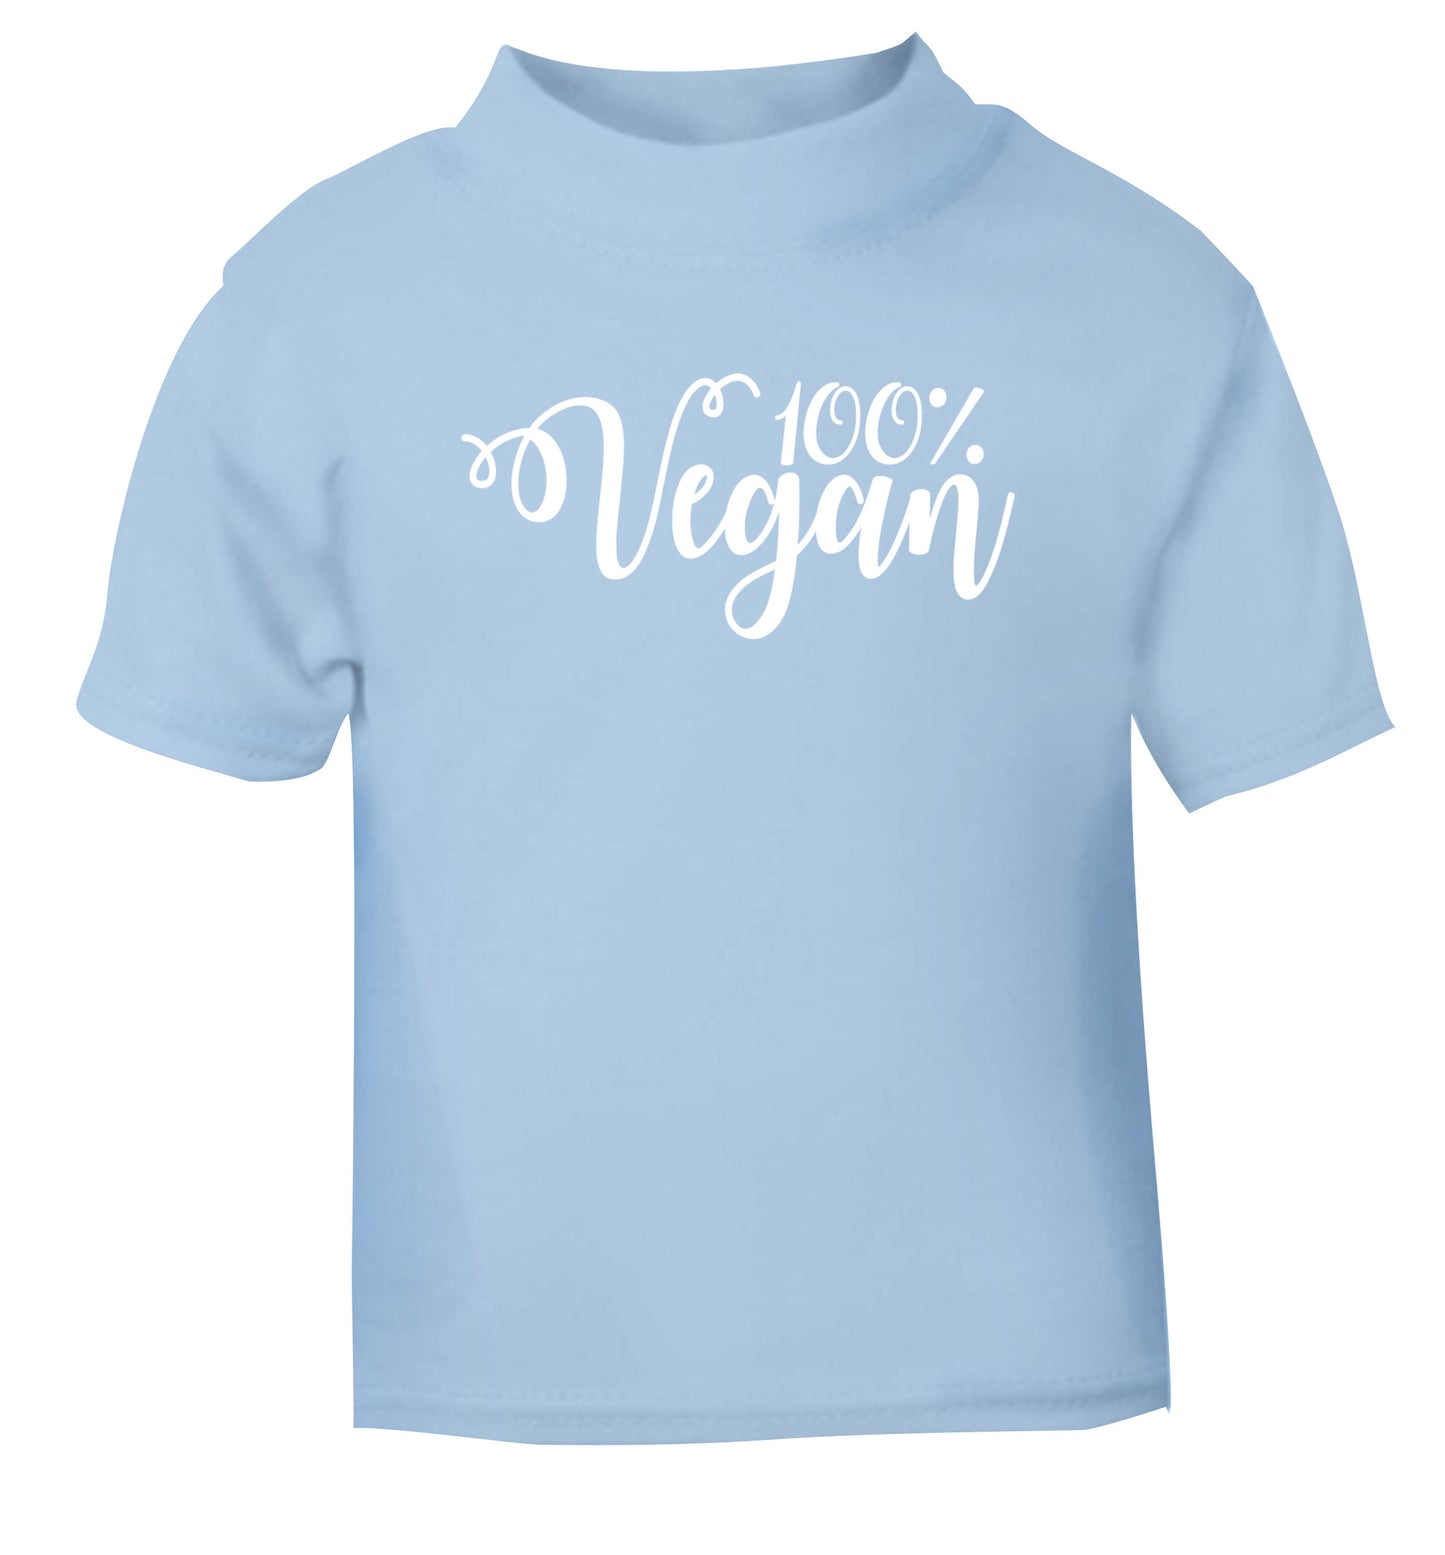 100% Vegan light blue Baby Toddler Tshirt 2 Years